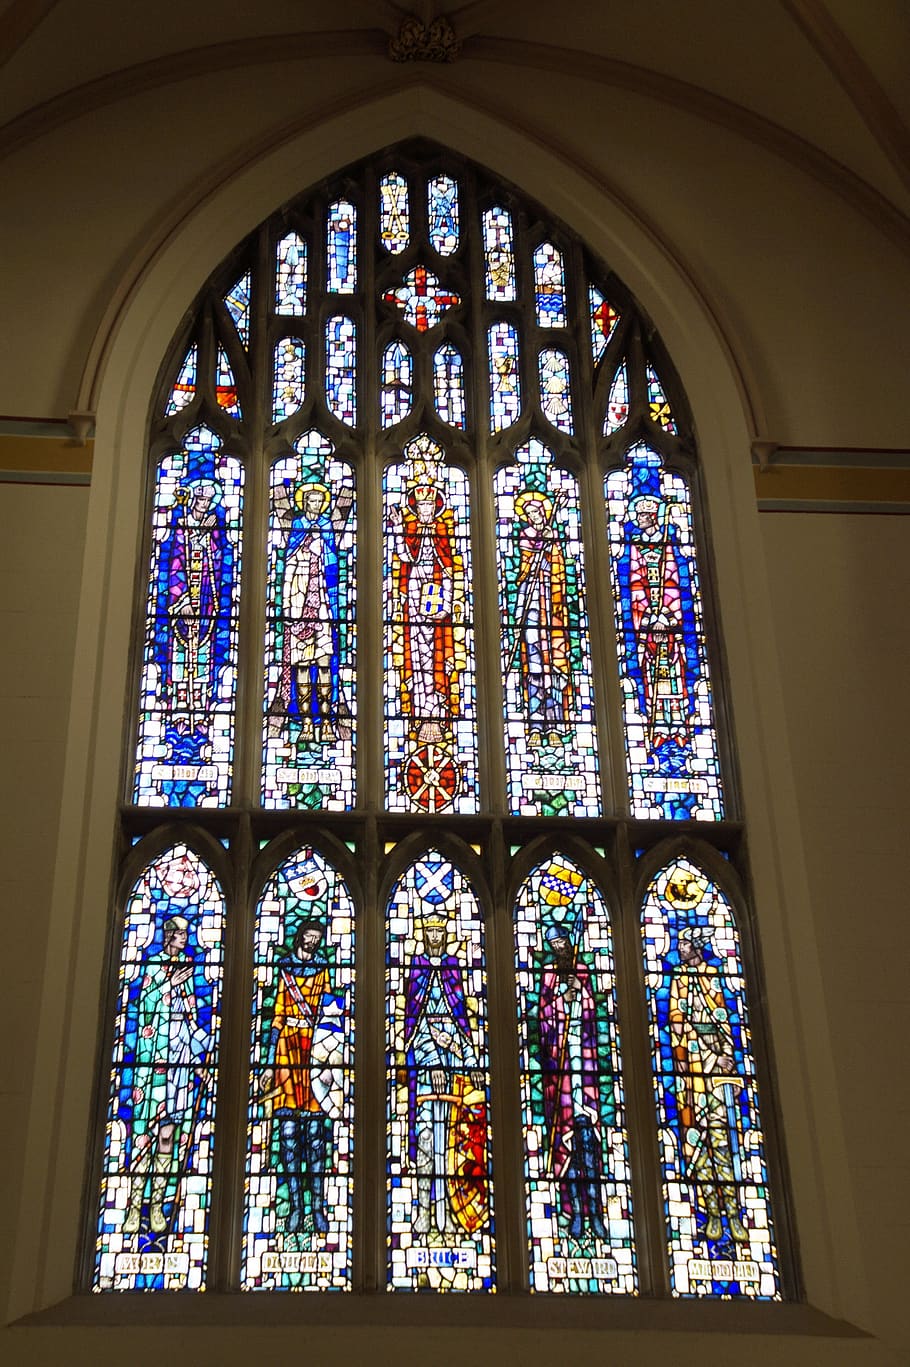 ventana de la iglesia, santo, escocia, dunfermline, catedral, iglesia, vitral, cristianismo, ventana, religión